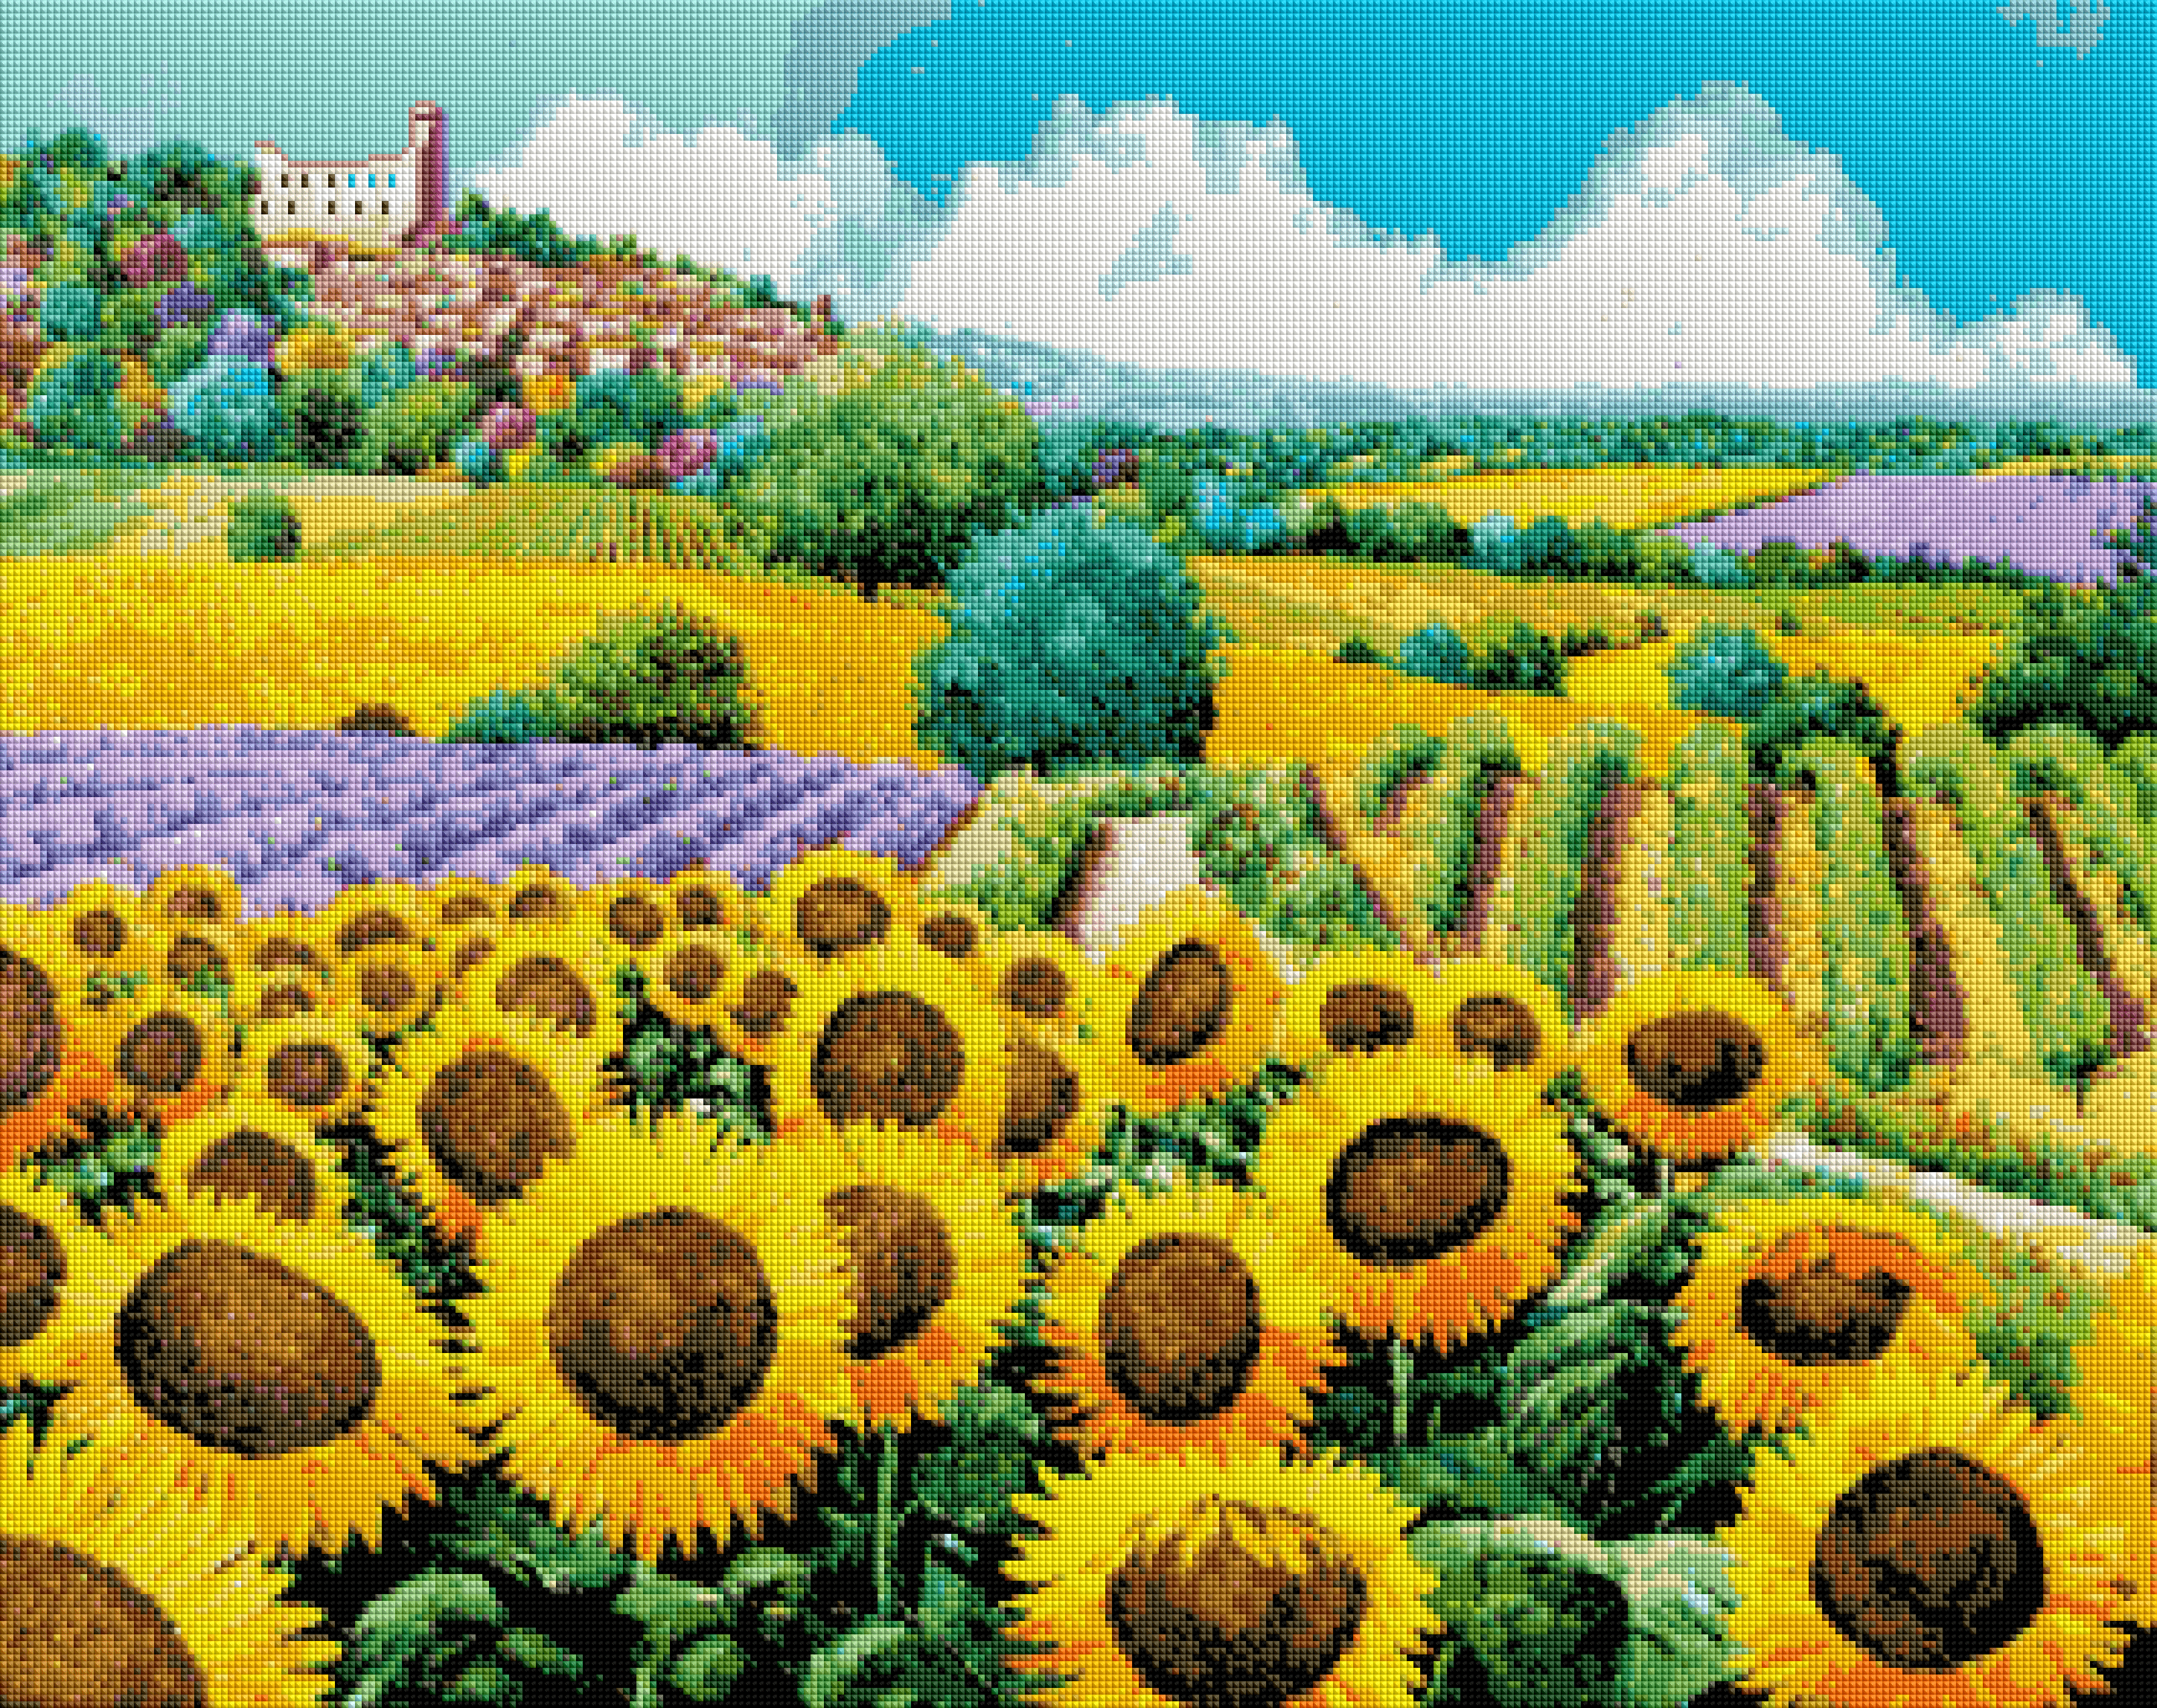 Vineyards and Sunflowers